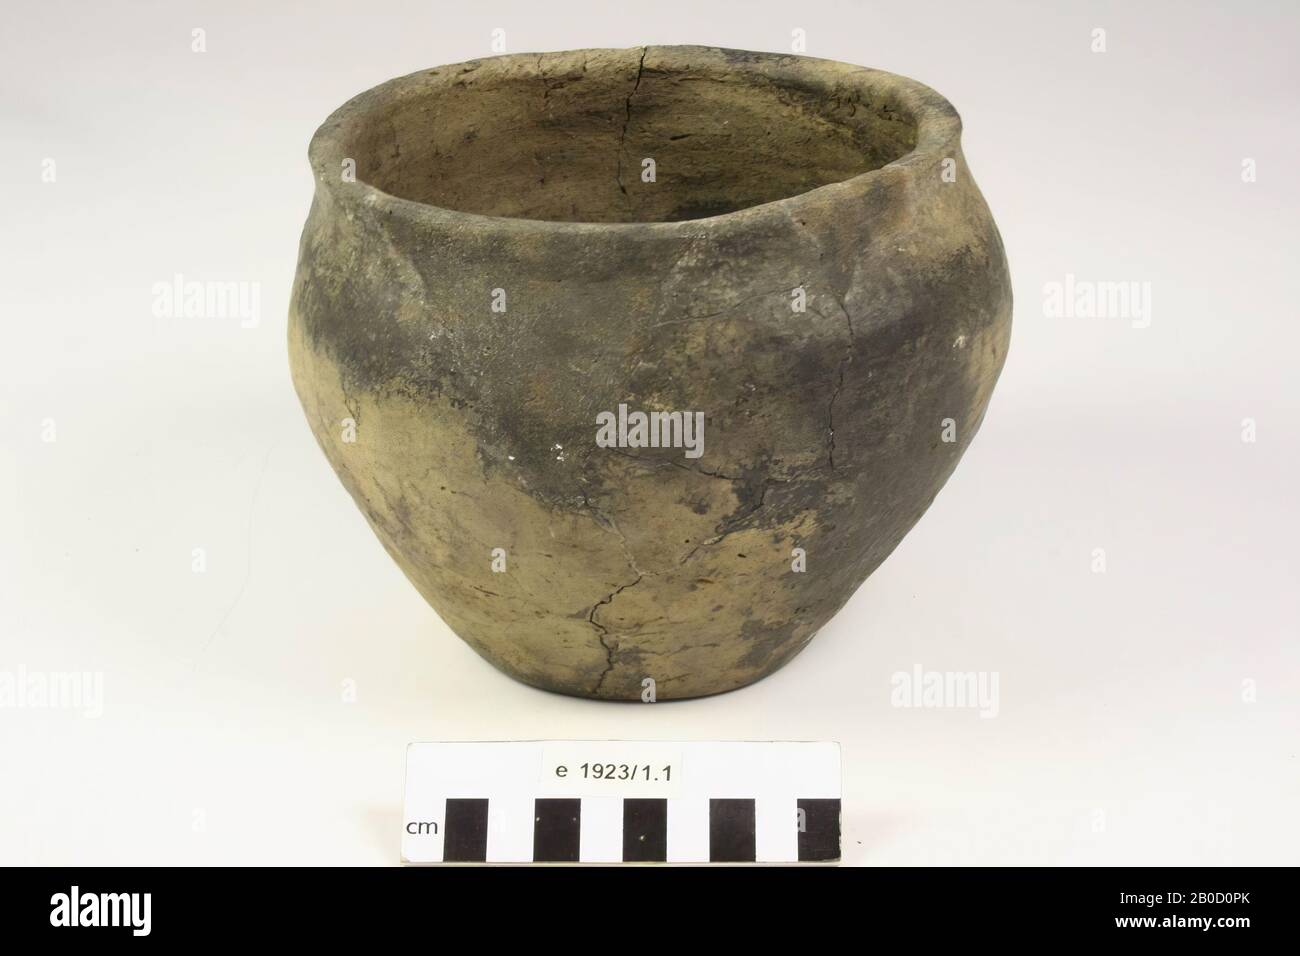 Urntje of earthenware. Old bonding, cracking. Contains cremated residues., Urntje, pottery, h: 14.4 cm, diam: 18.4 cm, roman, Netherlands, Gelderland, Ede, Ede Stock Photo